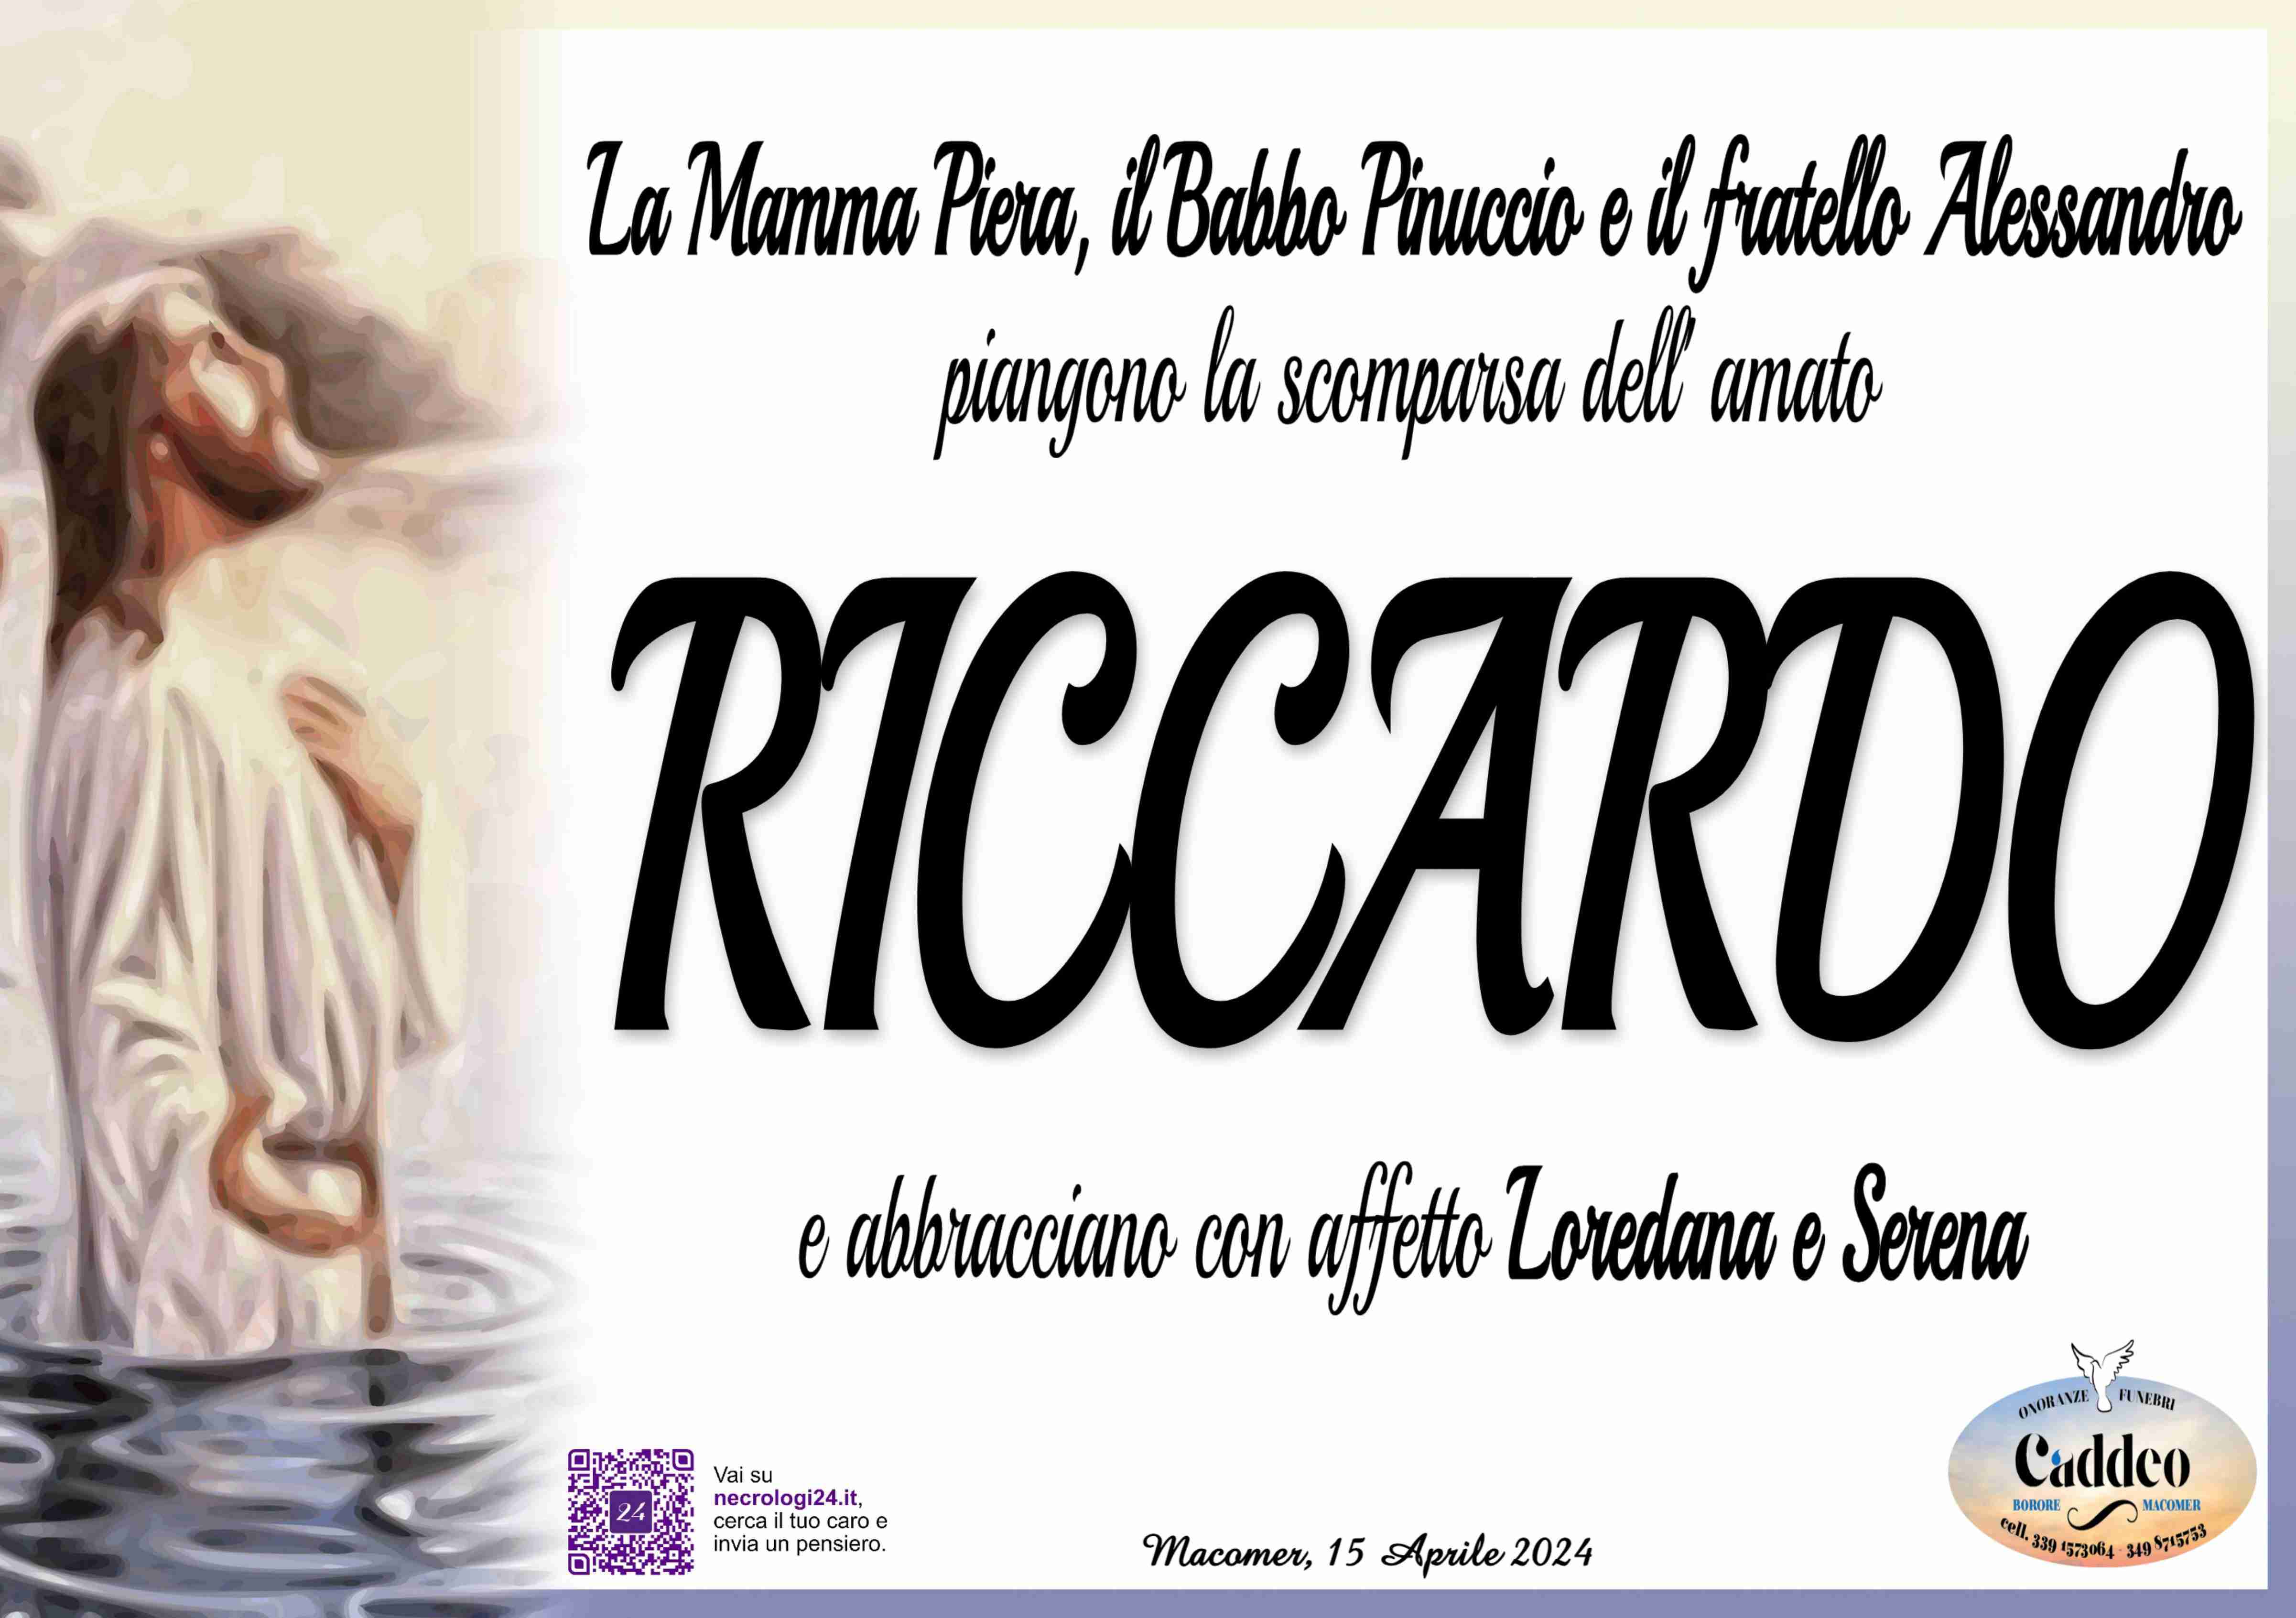 Riccardo Delrio